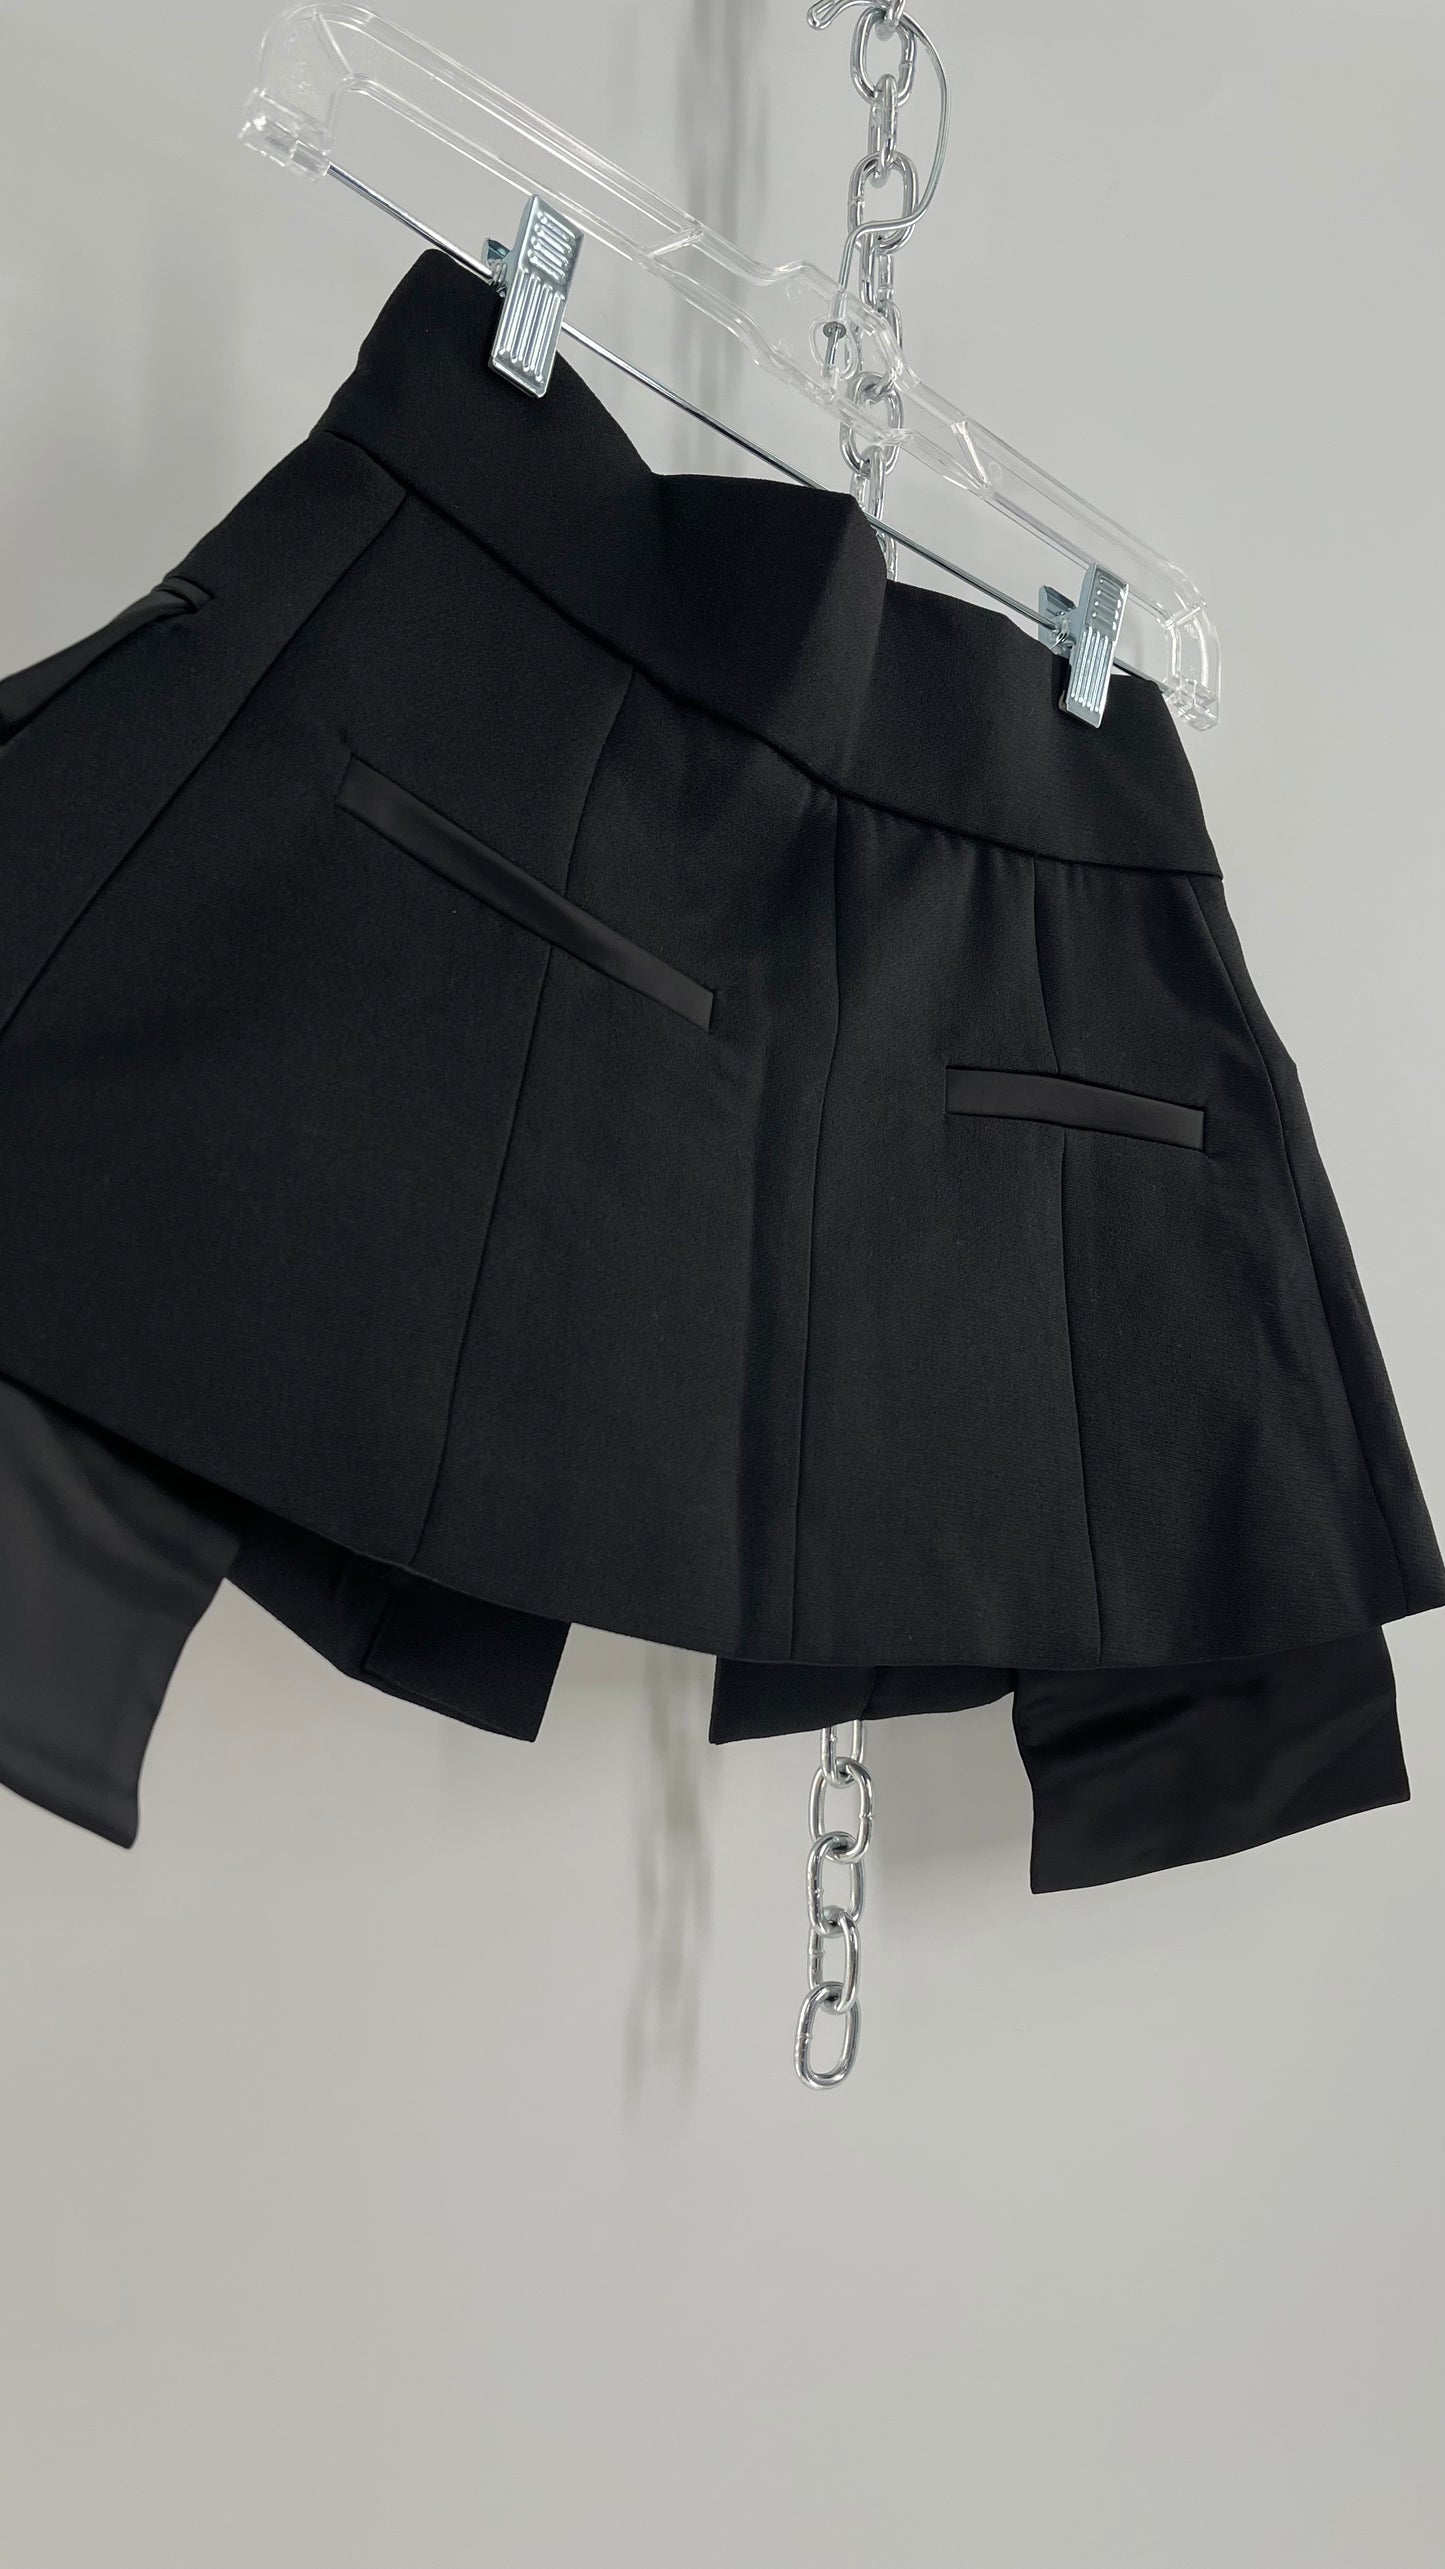 Black Skirt Belt Covered in Crystal Embellishments with Satin Flap Pockets (Medium)